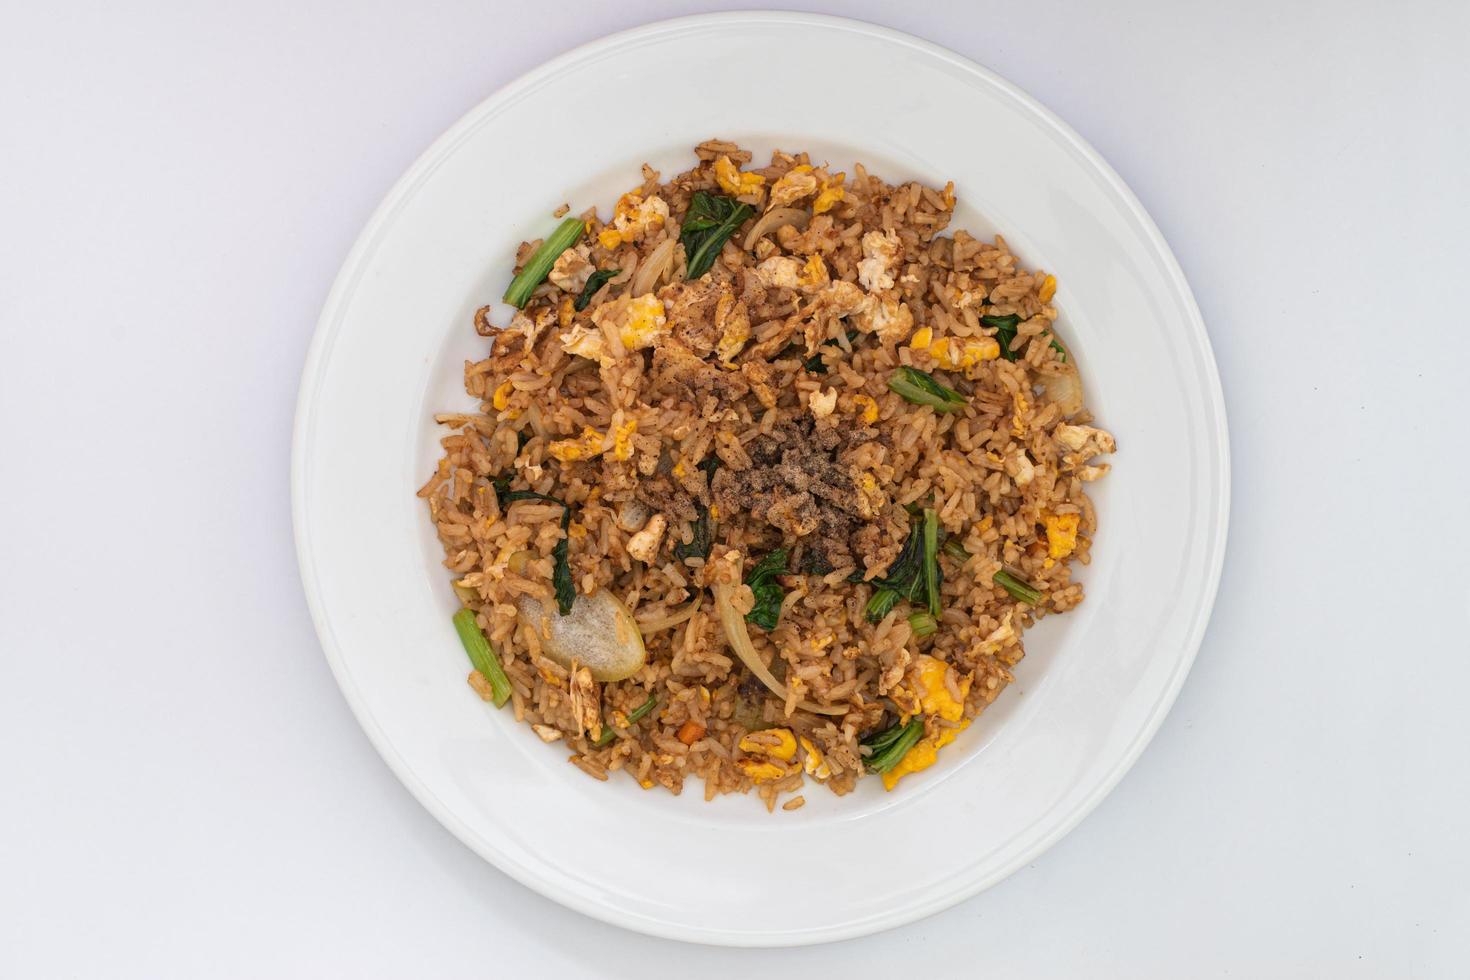 arroz frito simples com ingredientes simples, arroz, ovo estrelado, cebola, cenoura e legumes. arroz frito no prato branco isolado no fundo branco. estilo asiático de comida simples. foto